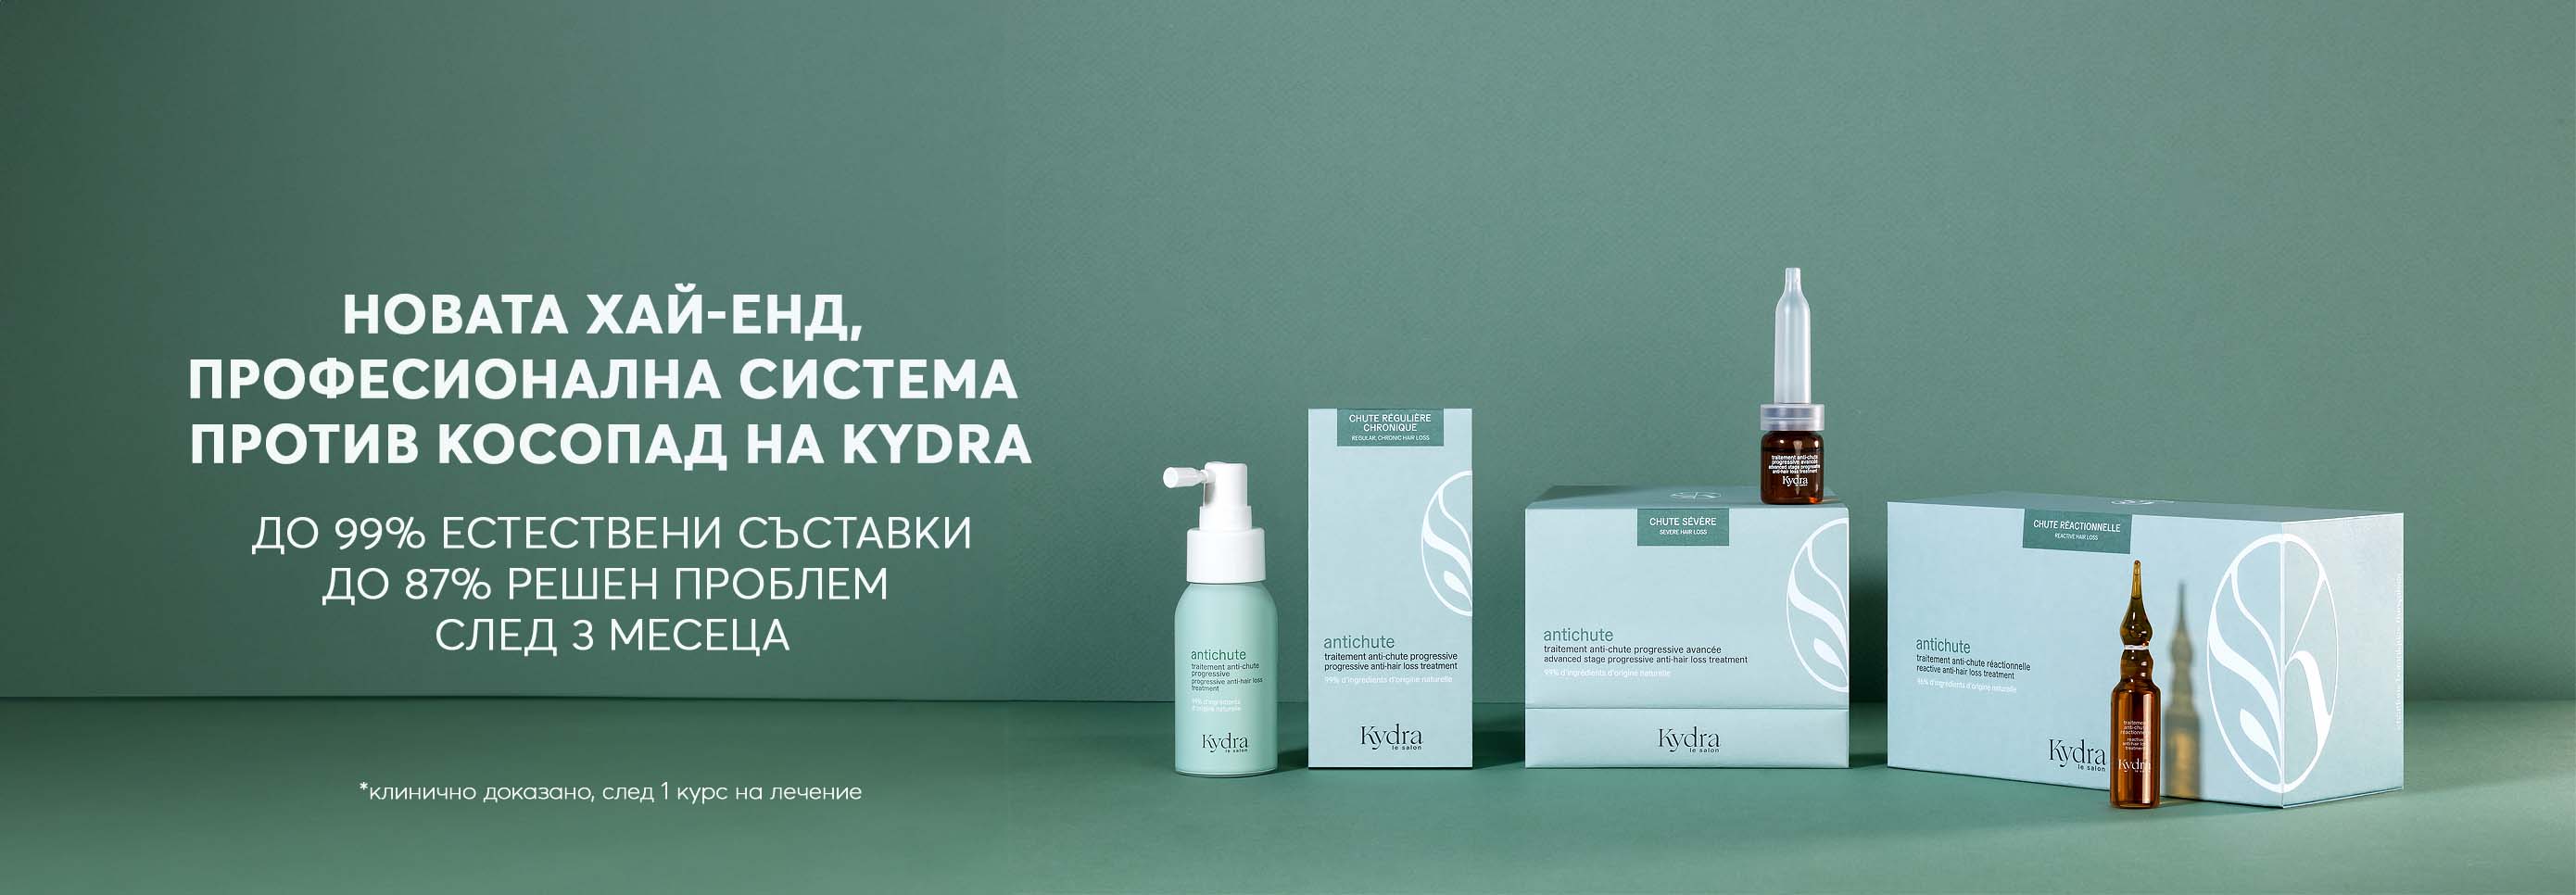 KYDRA professional high-end anti-hair loss system